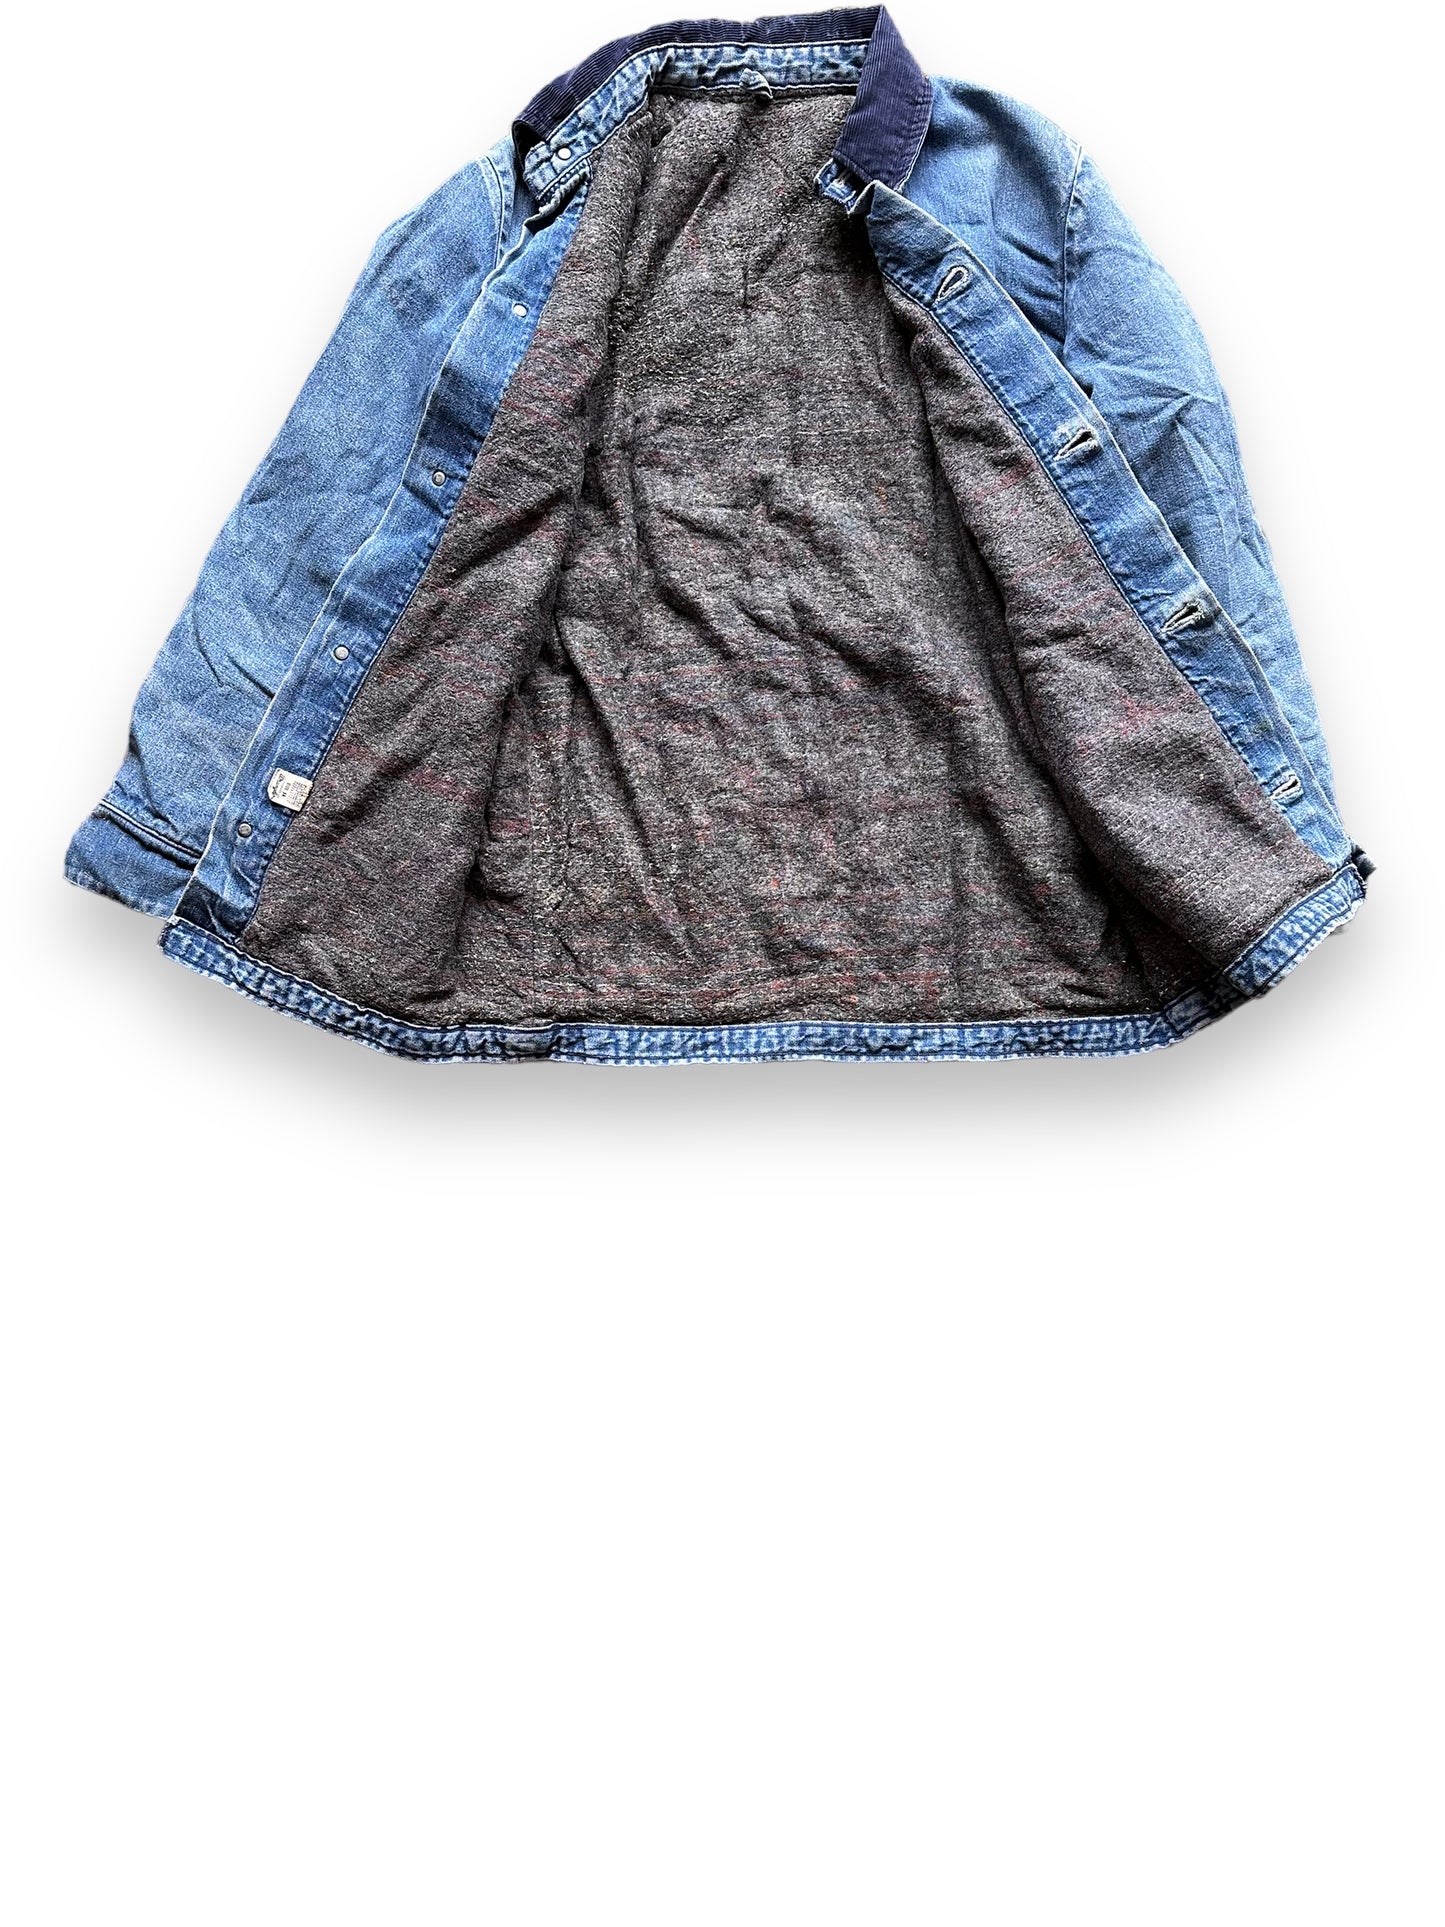 Liner View of Vintage Wrangler Blanket Lined Denim Chore Coat SZ 34 | Seattle Vintage Workwear | Barn Owl Vintage Seattle